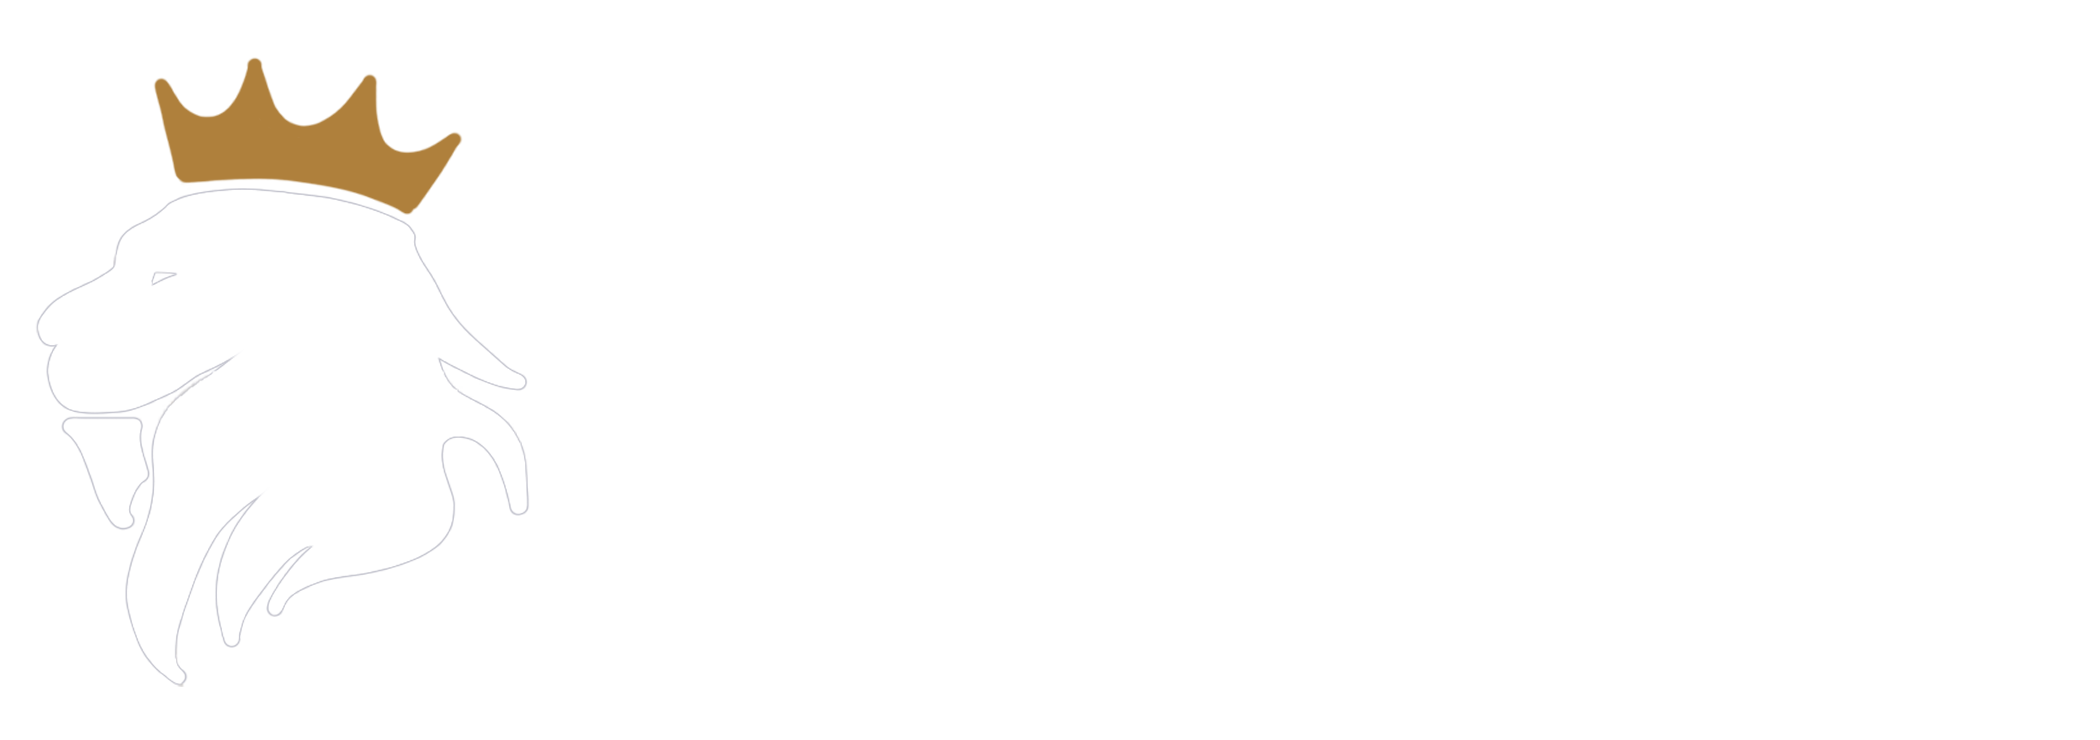 Classic Conservatories NI Logo White